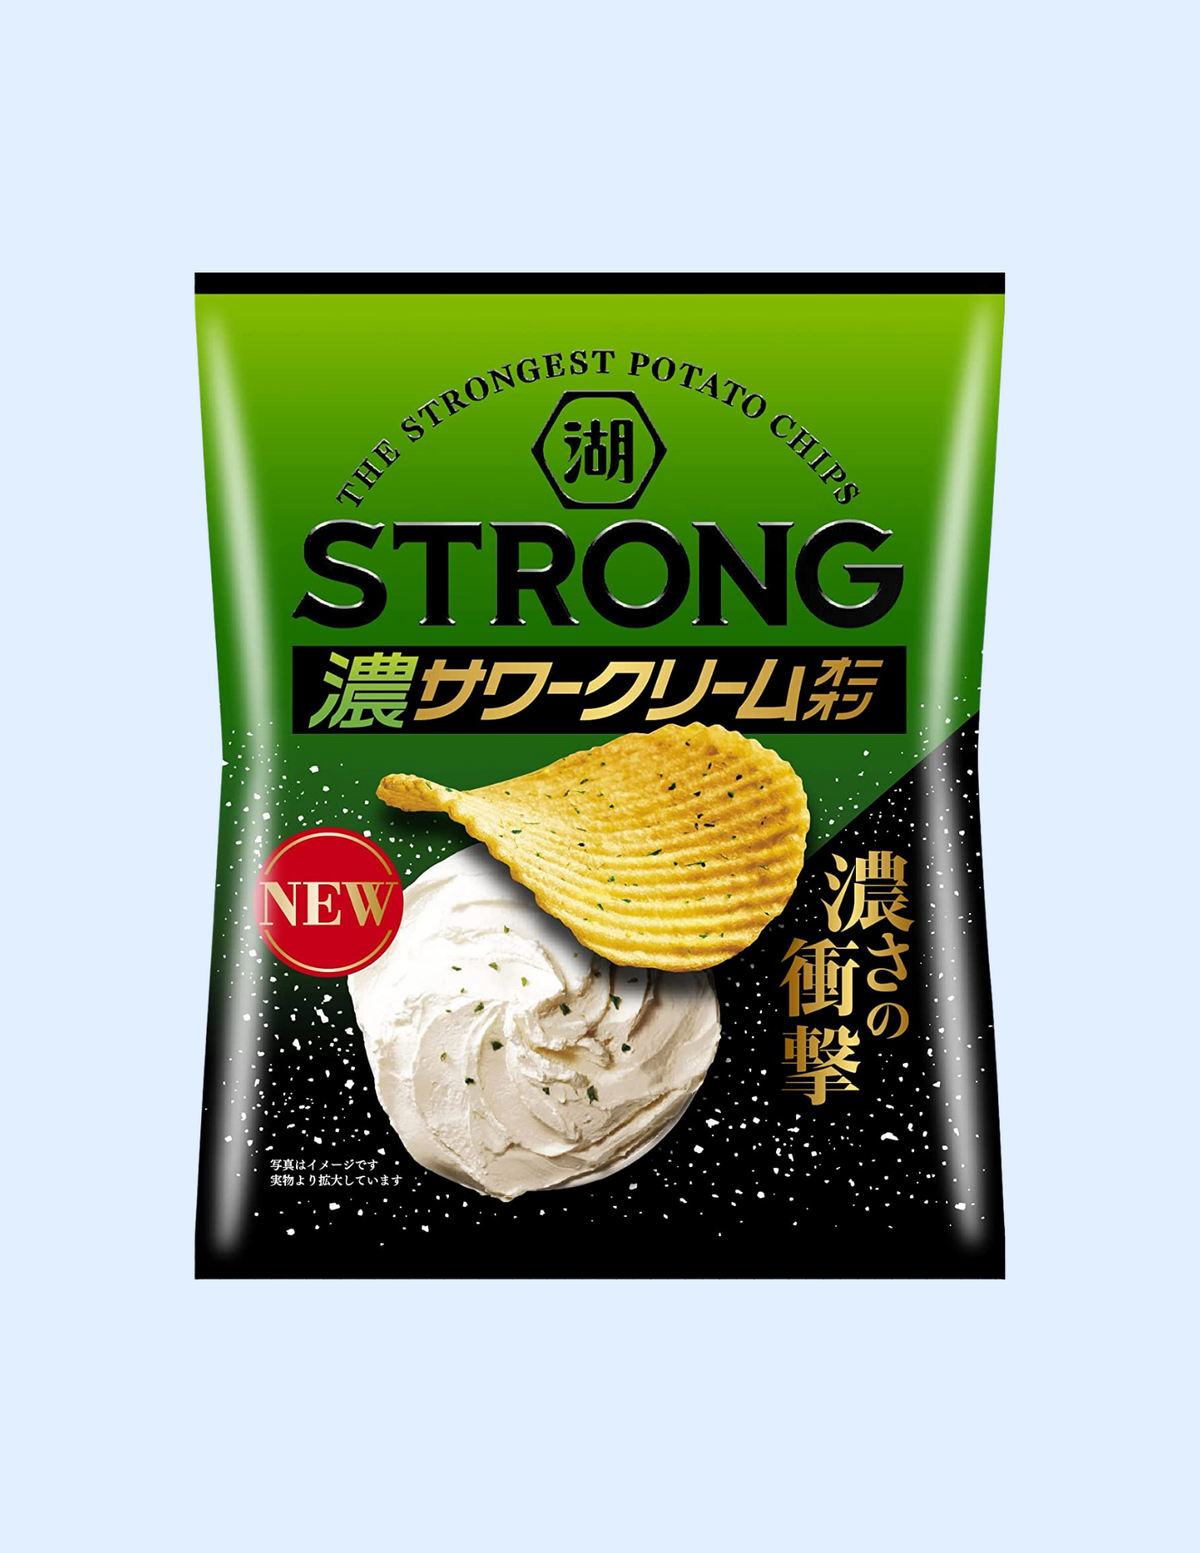 Koikeya Strong Sour Cream & Onion Potato Chips